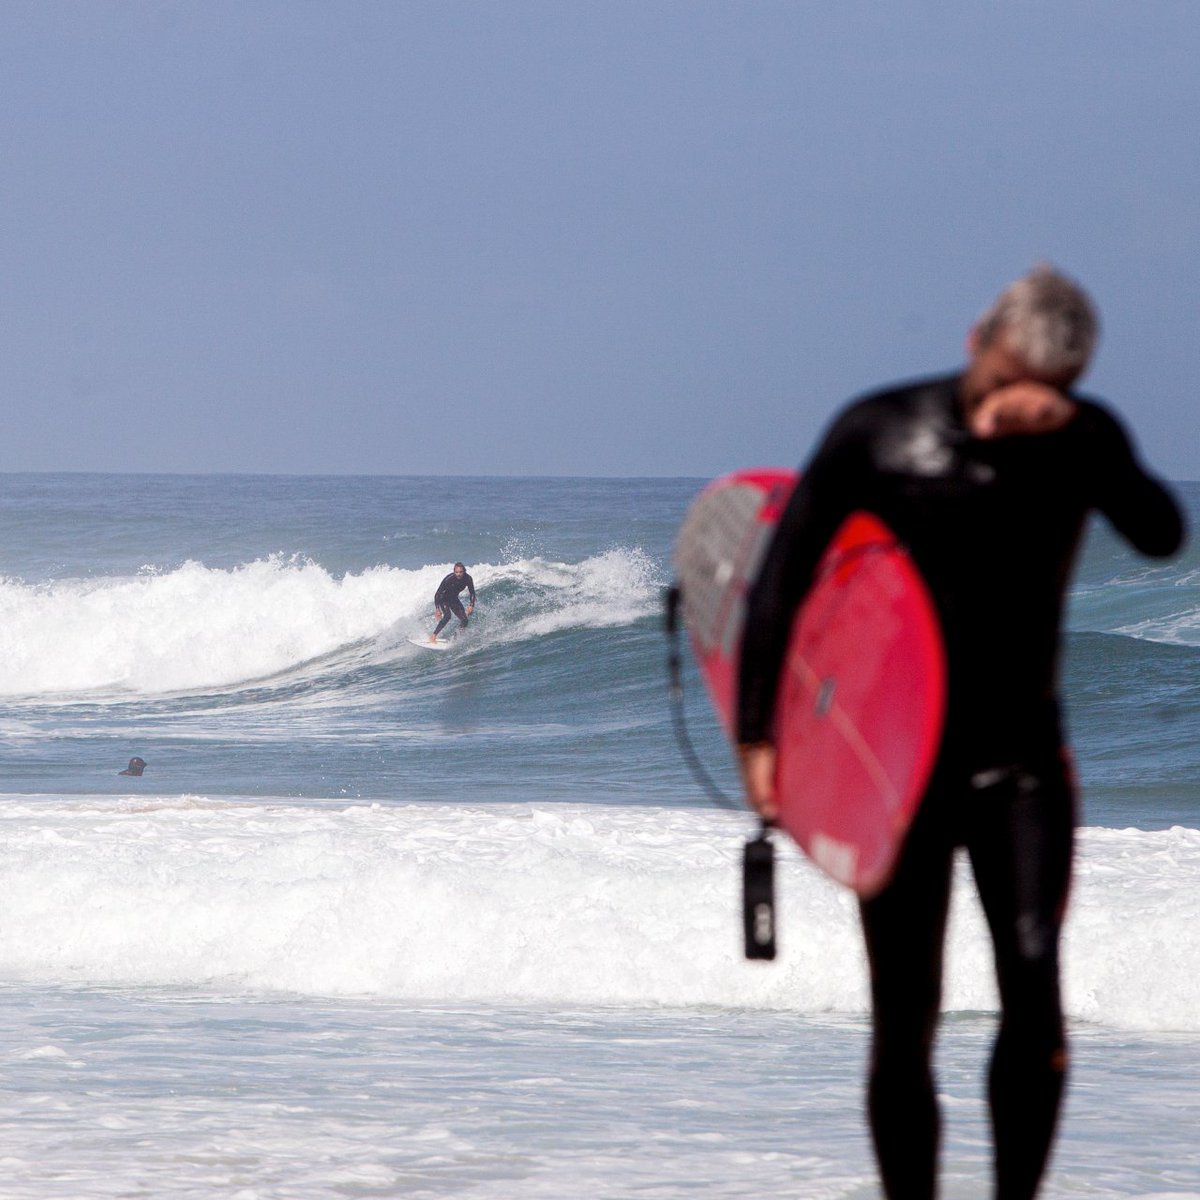 Really? It's monday again???? #OceanDeservesBetter #EcoWaveChasers #OceanRevival #SurfingSustainability #Waveguardians #Sustainasurf #RideResponsibly #ProtectOurOceans #GreenerTides #SurfandProtect #surfboards #surfers #surfing #FrontGrip #ecosurf #surfgrip #vanderwaalgrip